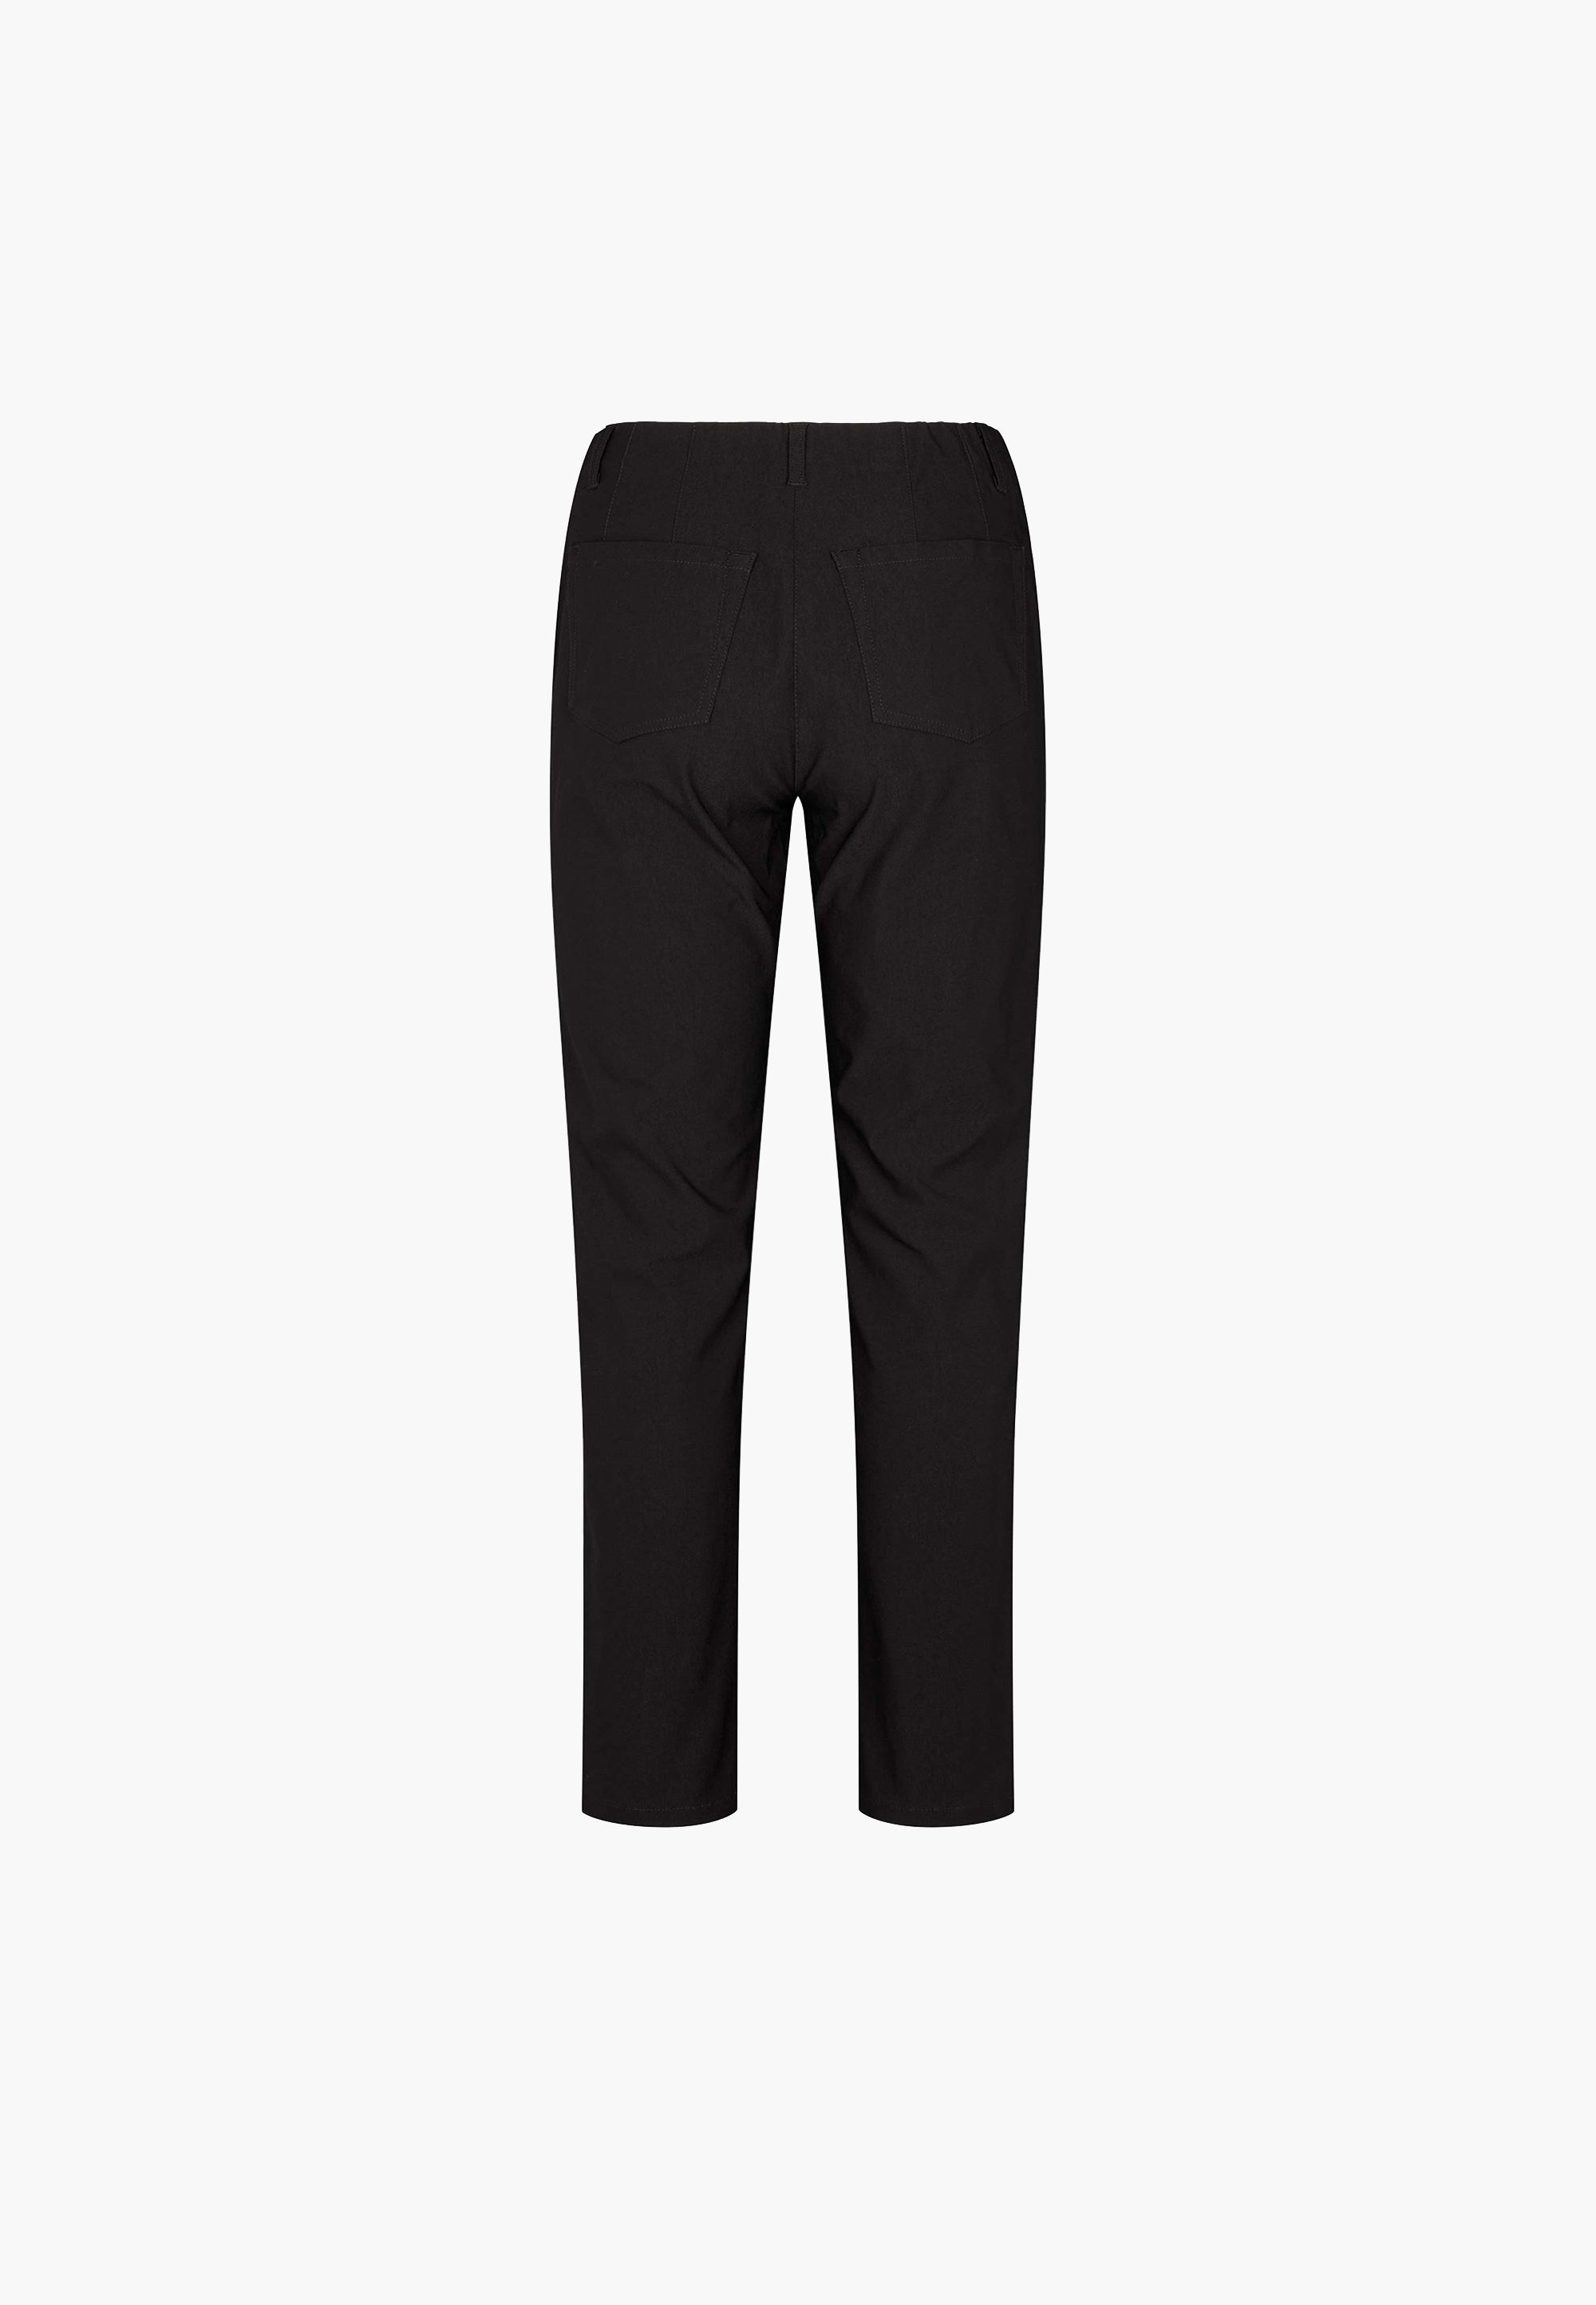 LAURIE  Rylie Pocket Regular - Medium Length Trousers REGULAR 99970 Black